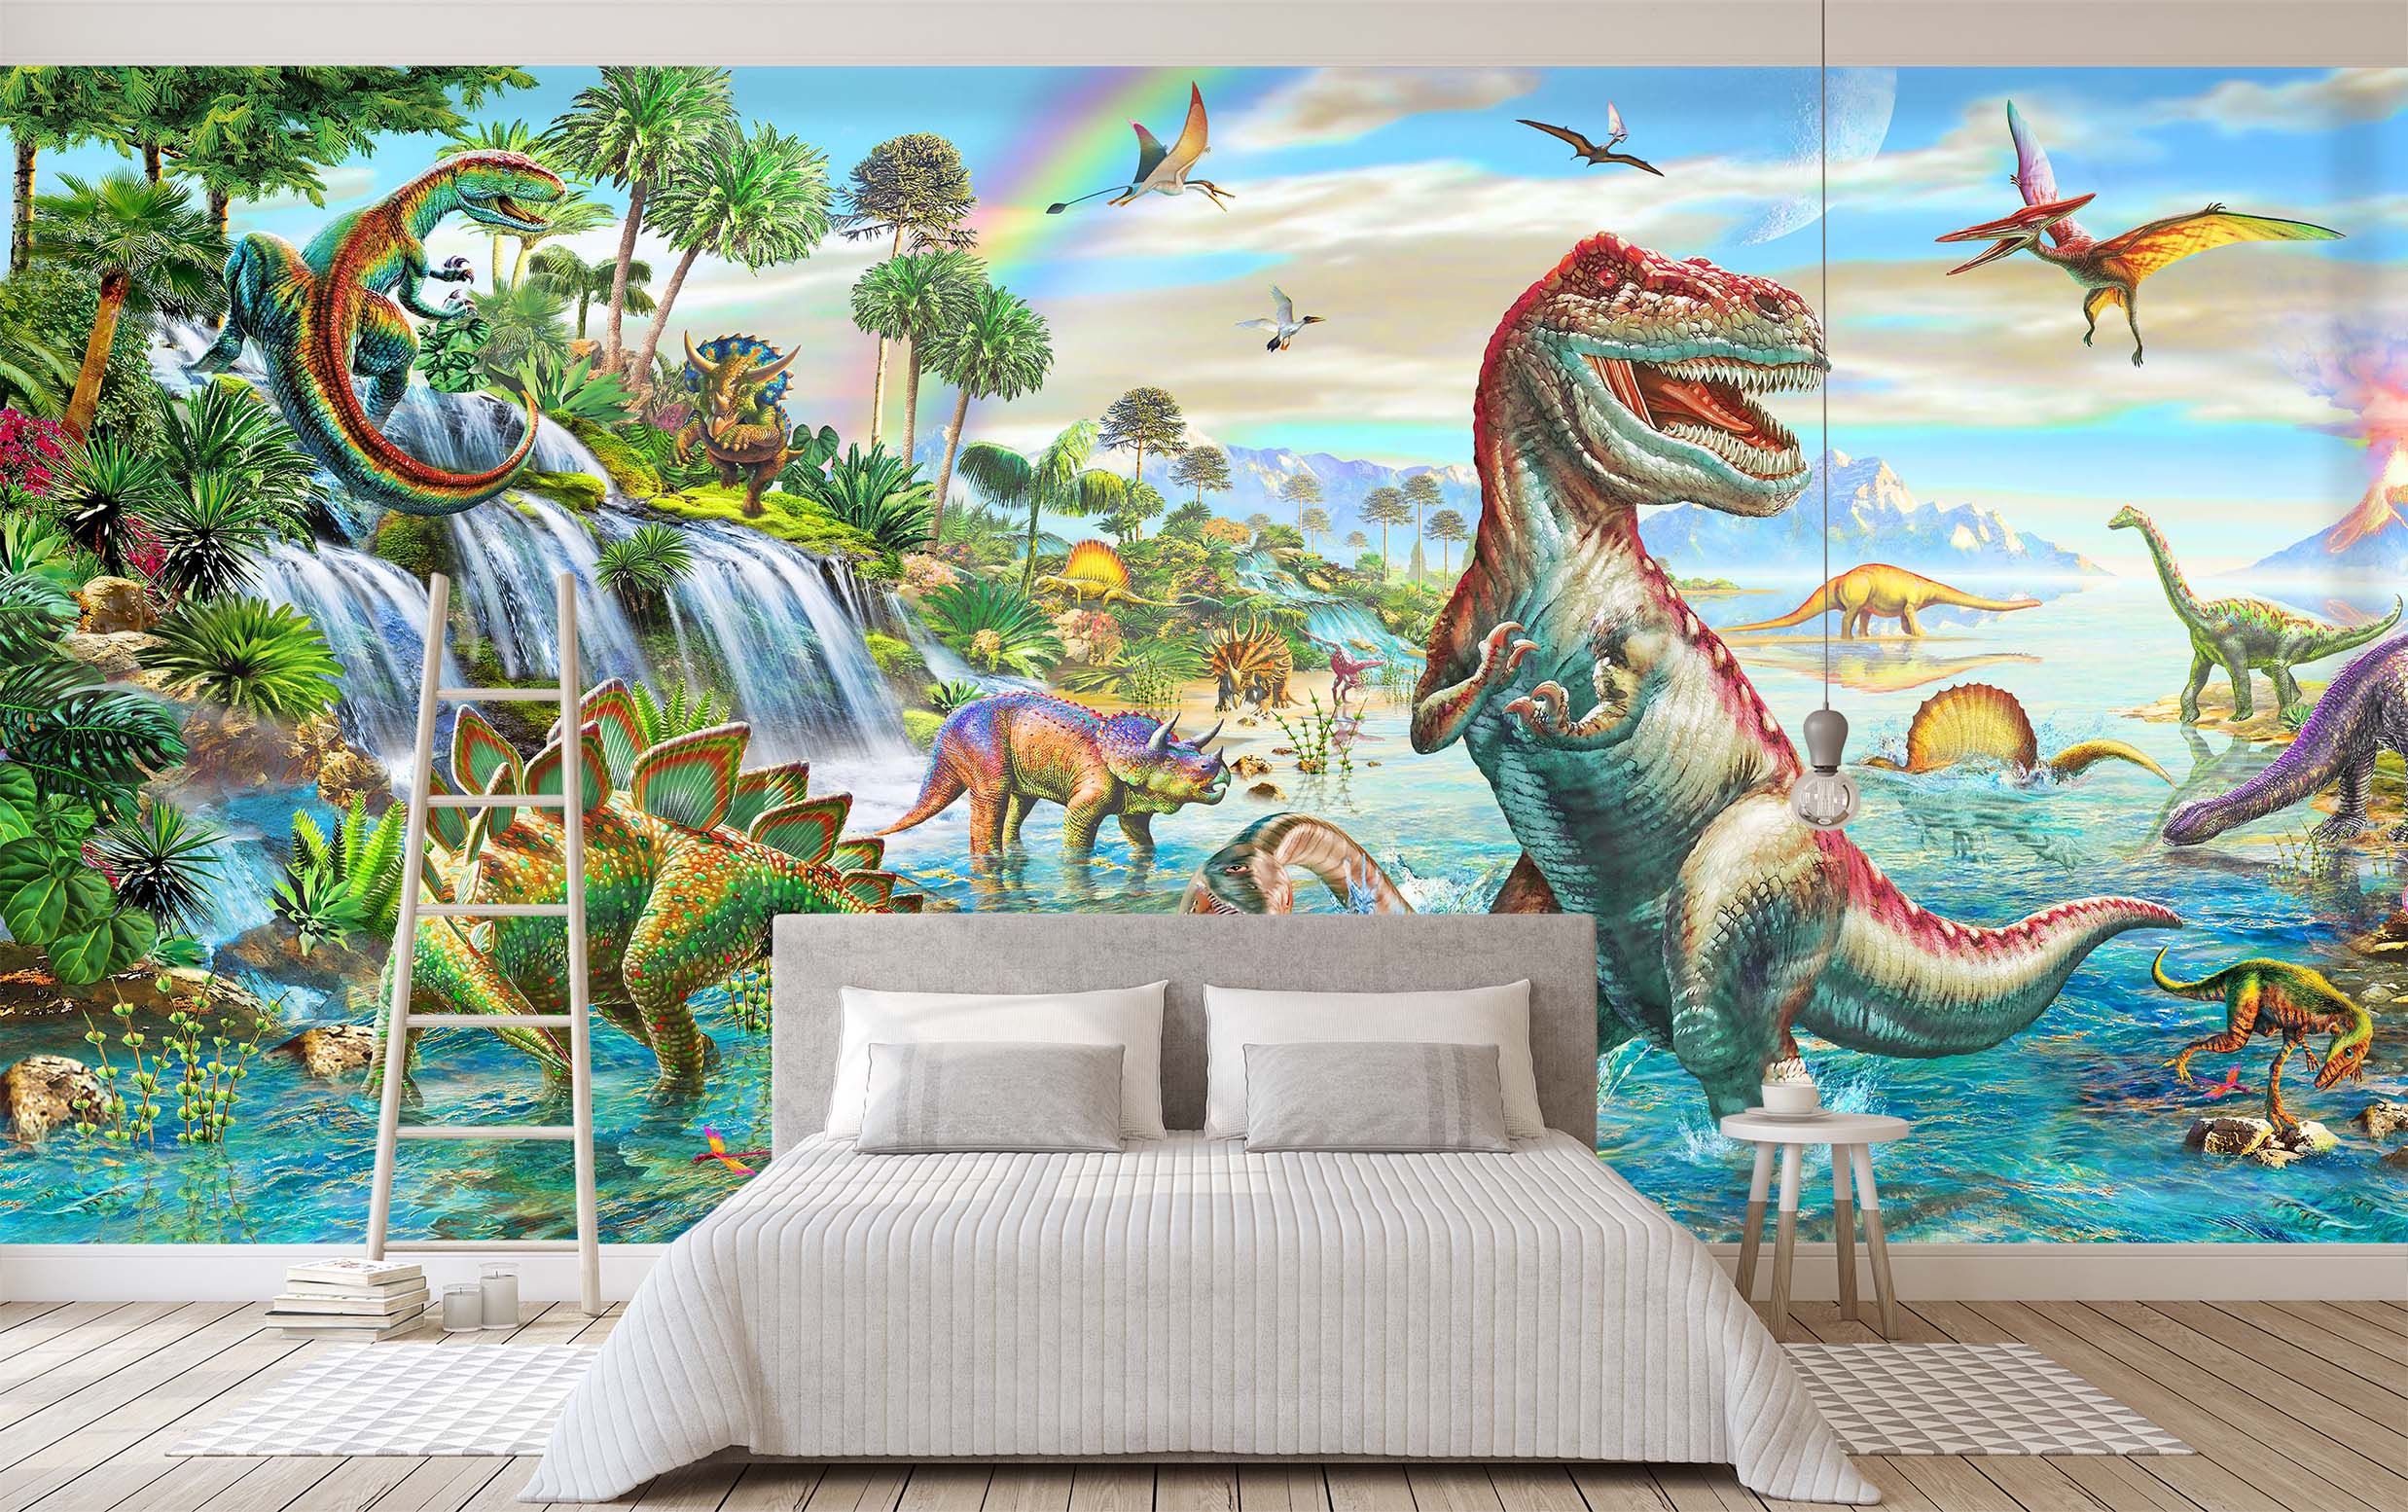 3D Dinosaur Canyon 1418 Adrian Chesterman Wall Mural Wall Murals